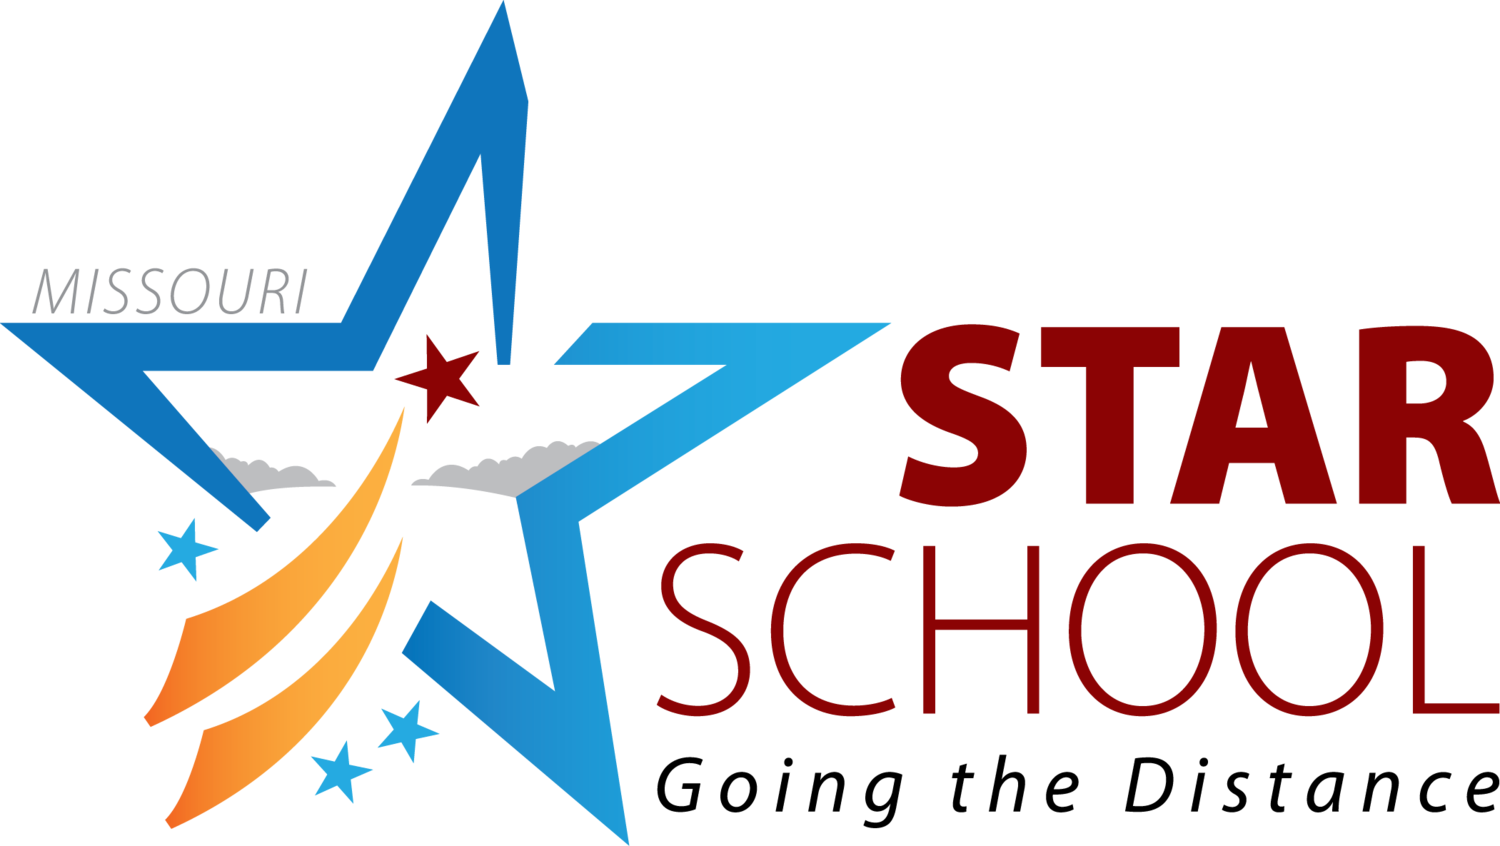 Missouri Star School Program